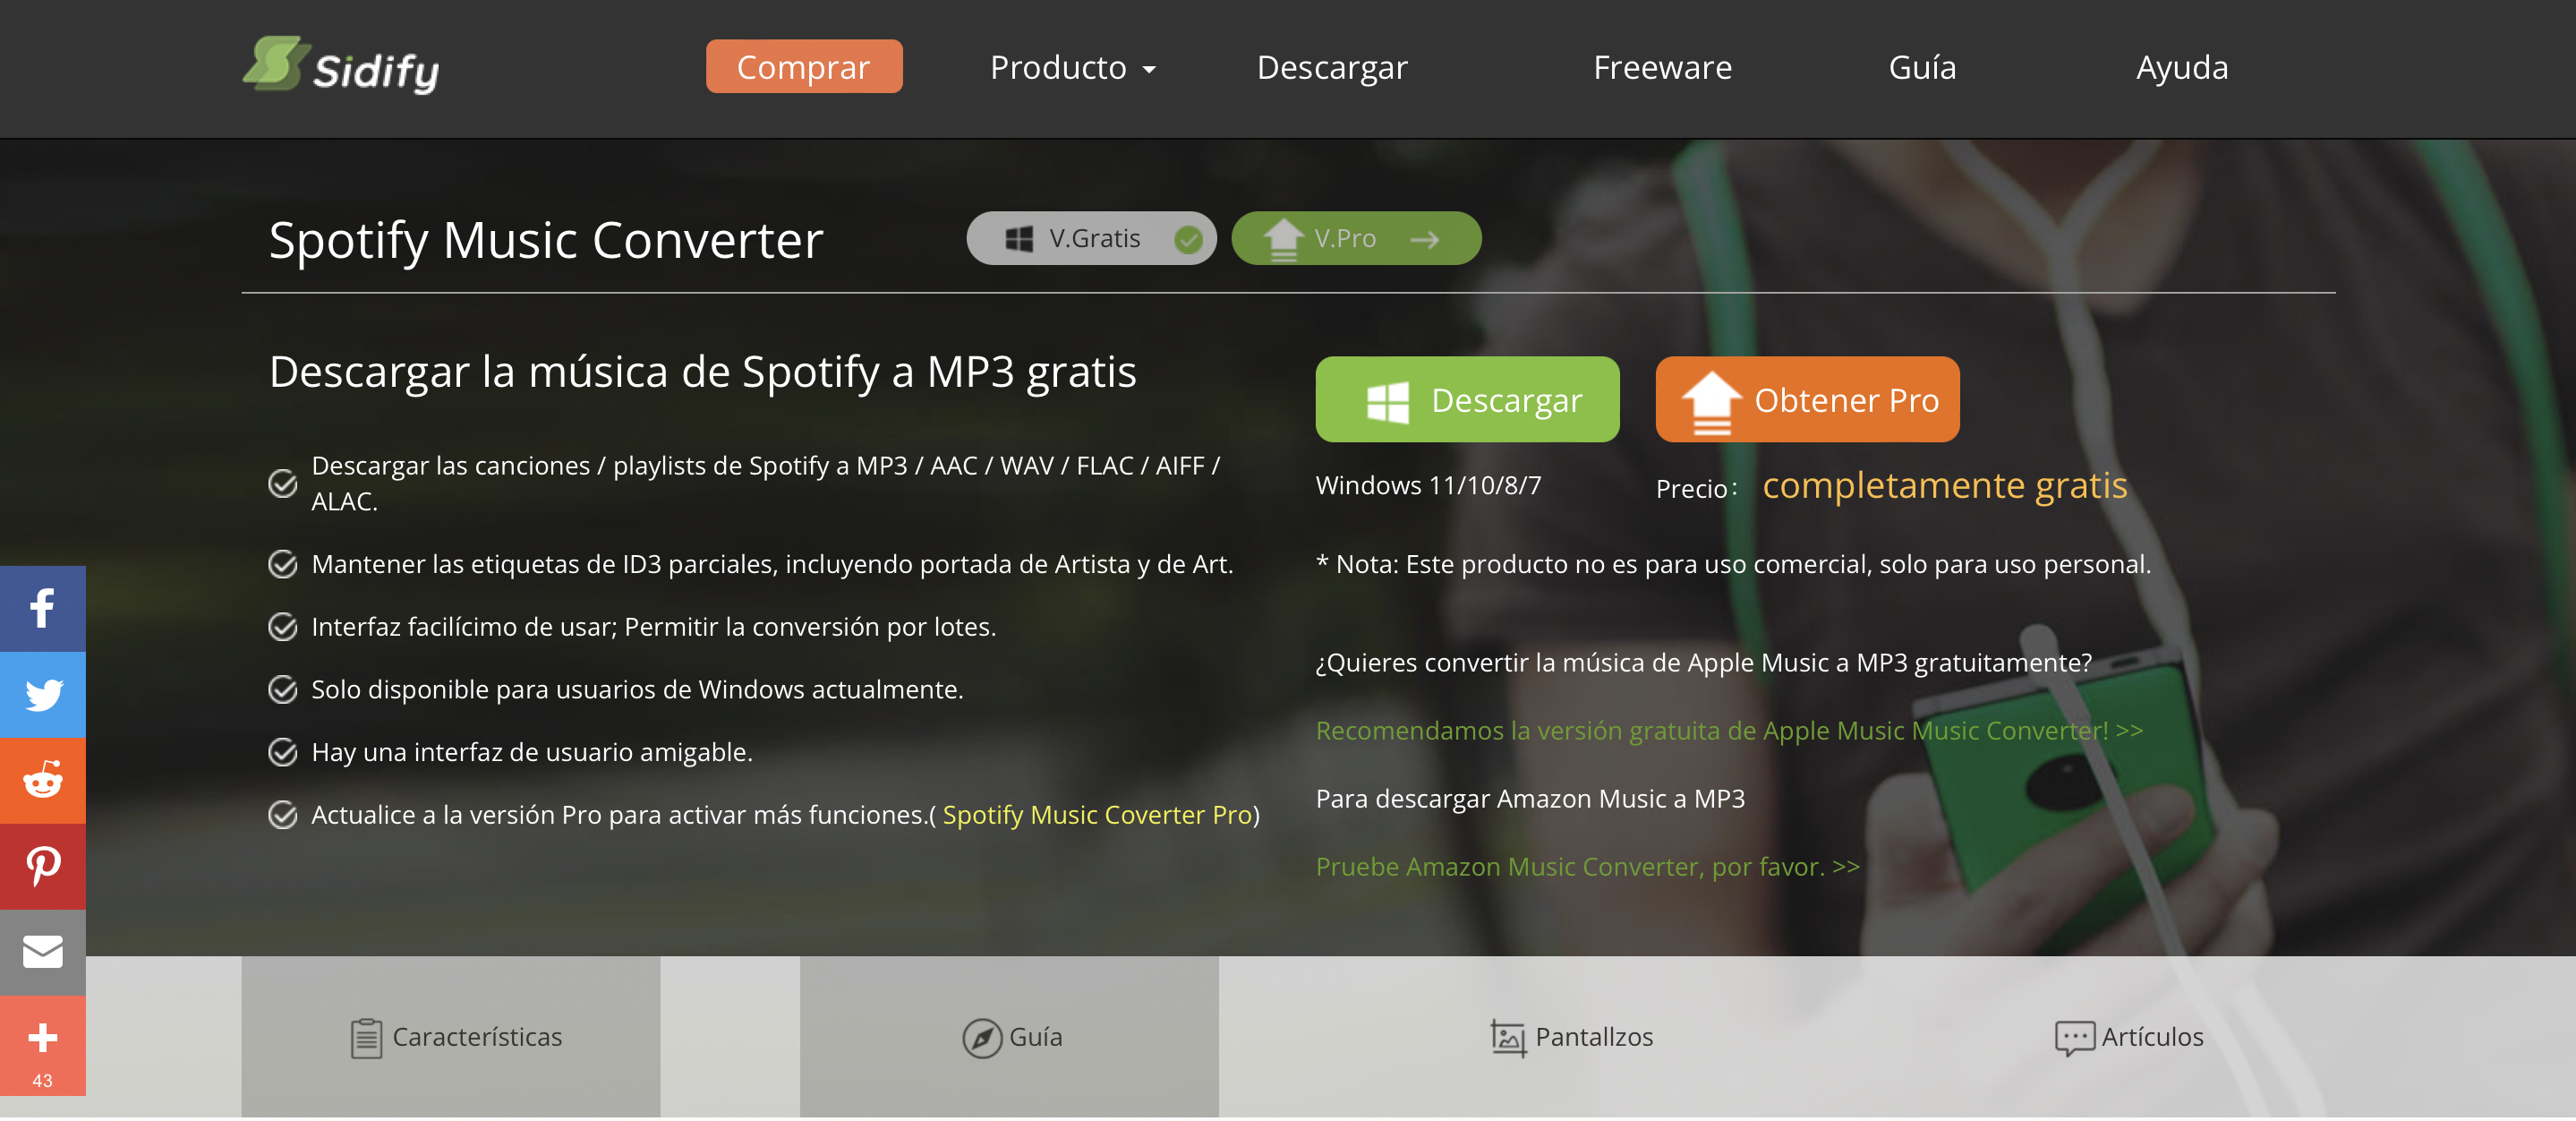 Spotify Music Converter.  (Foto: https://www.sidify.es/sidify-windows-free/drm-music-converter-free.html)